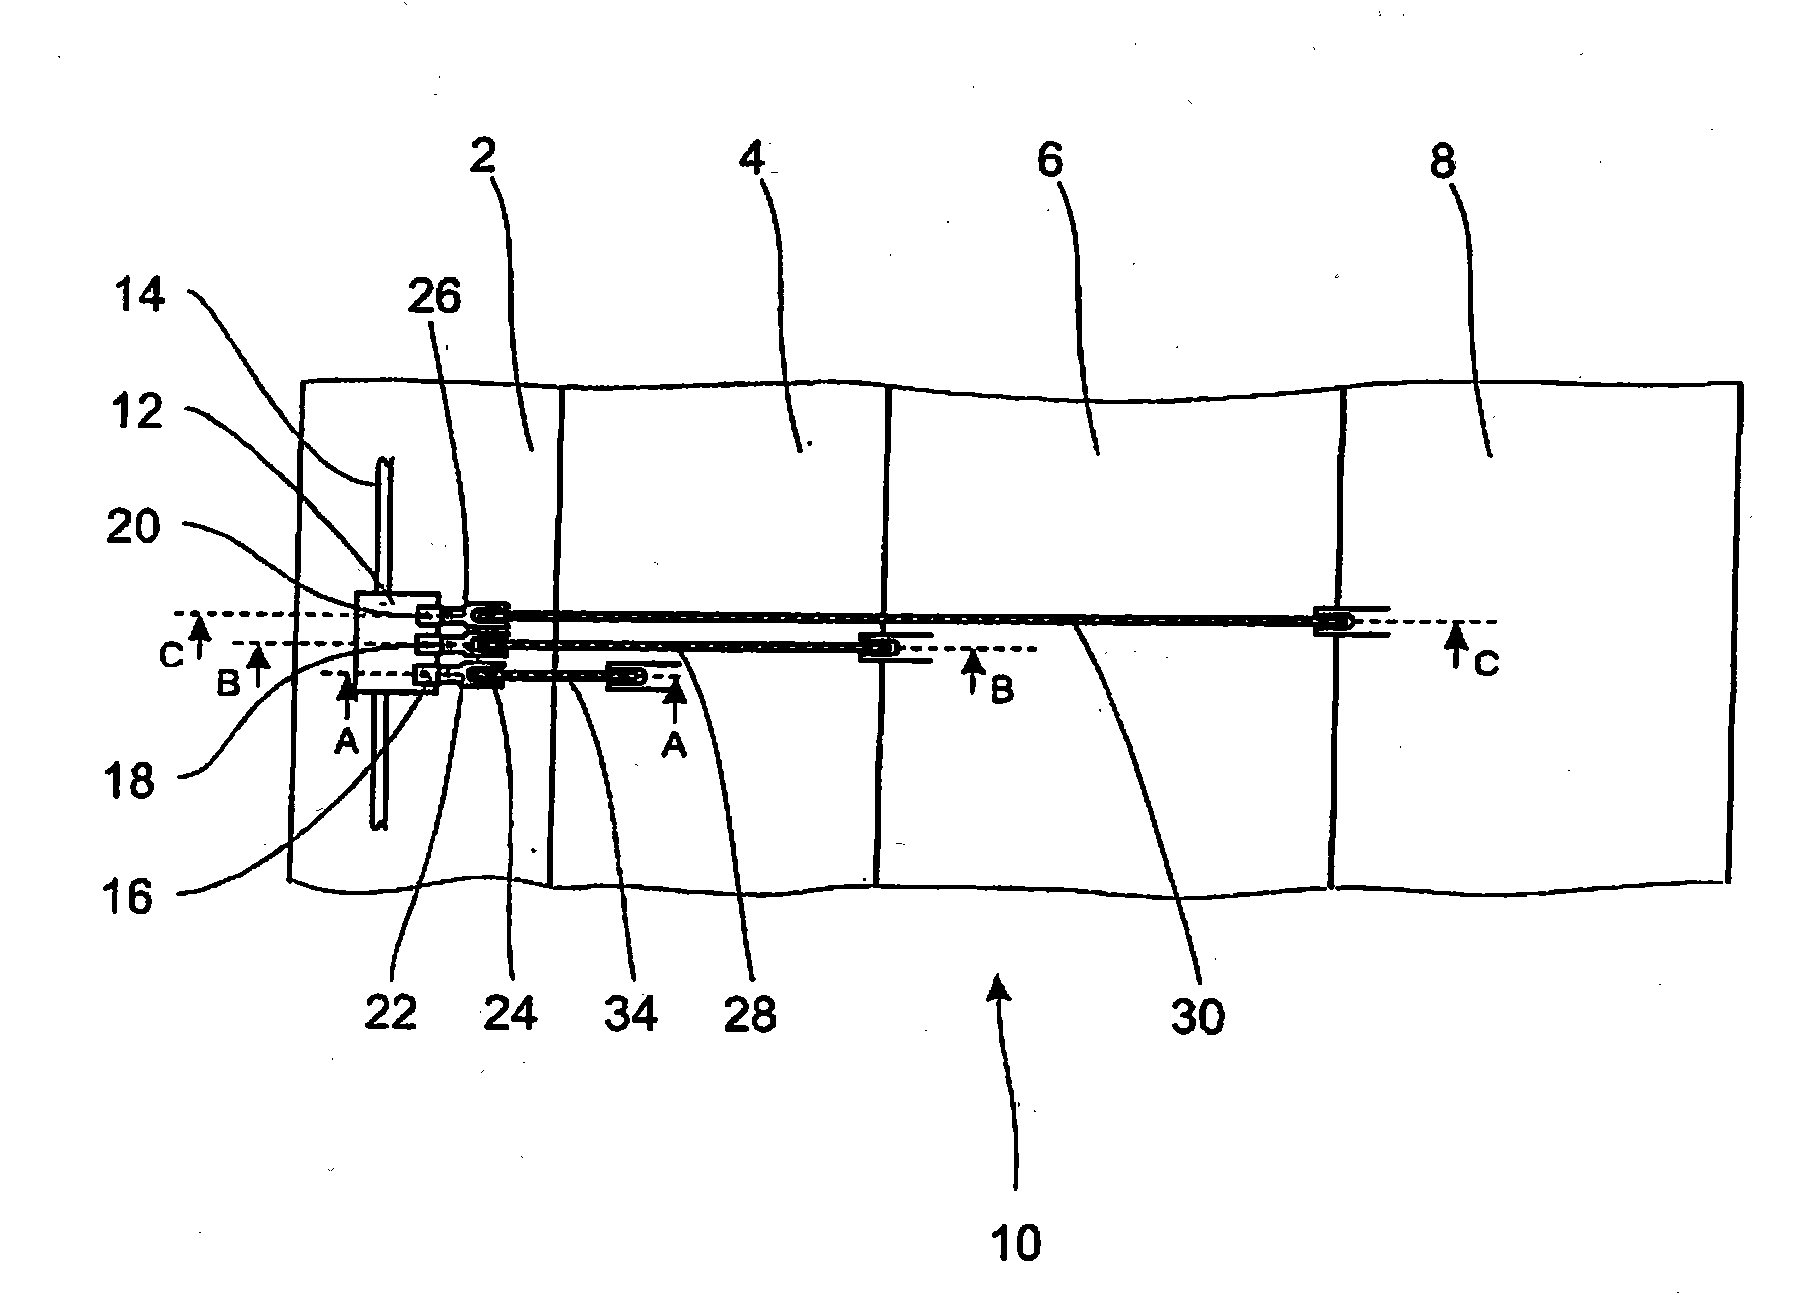 Landing flap mechanism driven by pinion gears